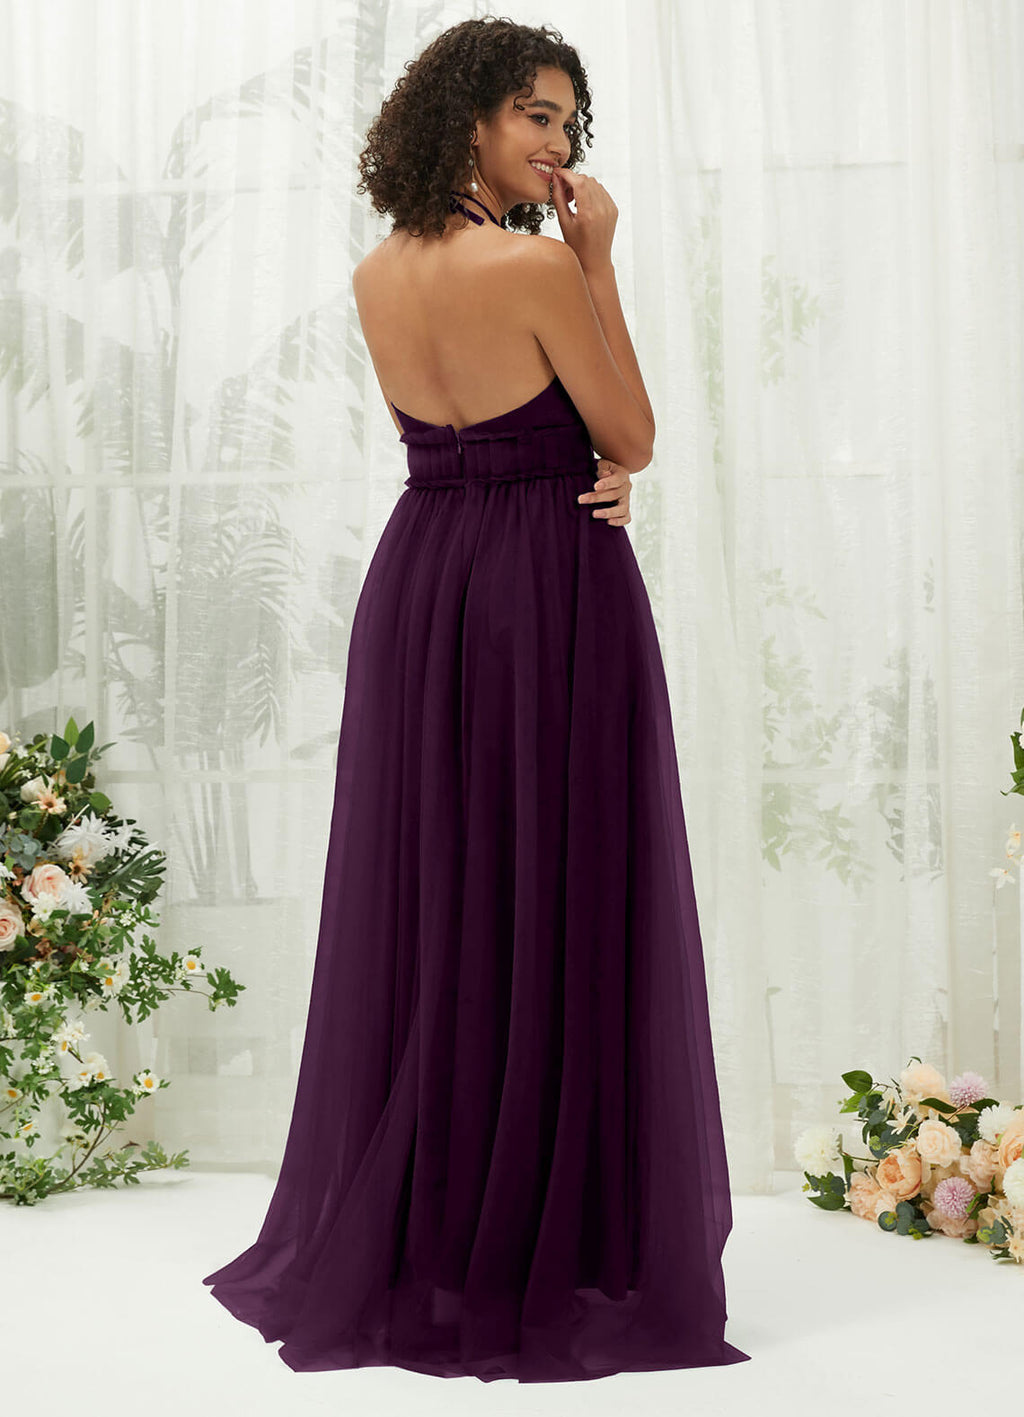 NZ Bridal Plum Backless Tulle Floor Length bridesmaid dresses R1025 Naya a